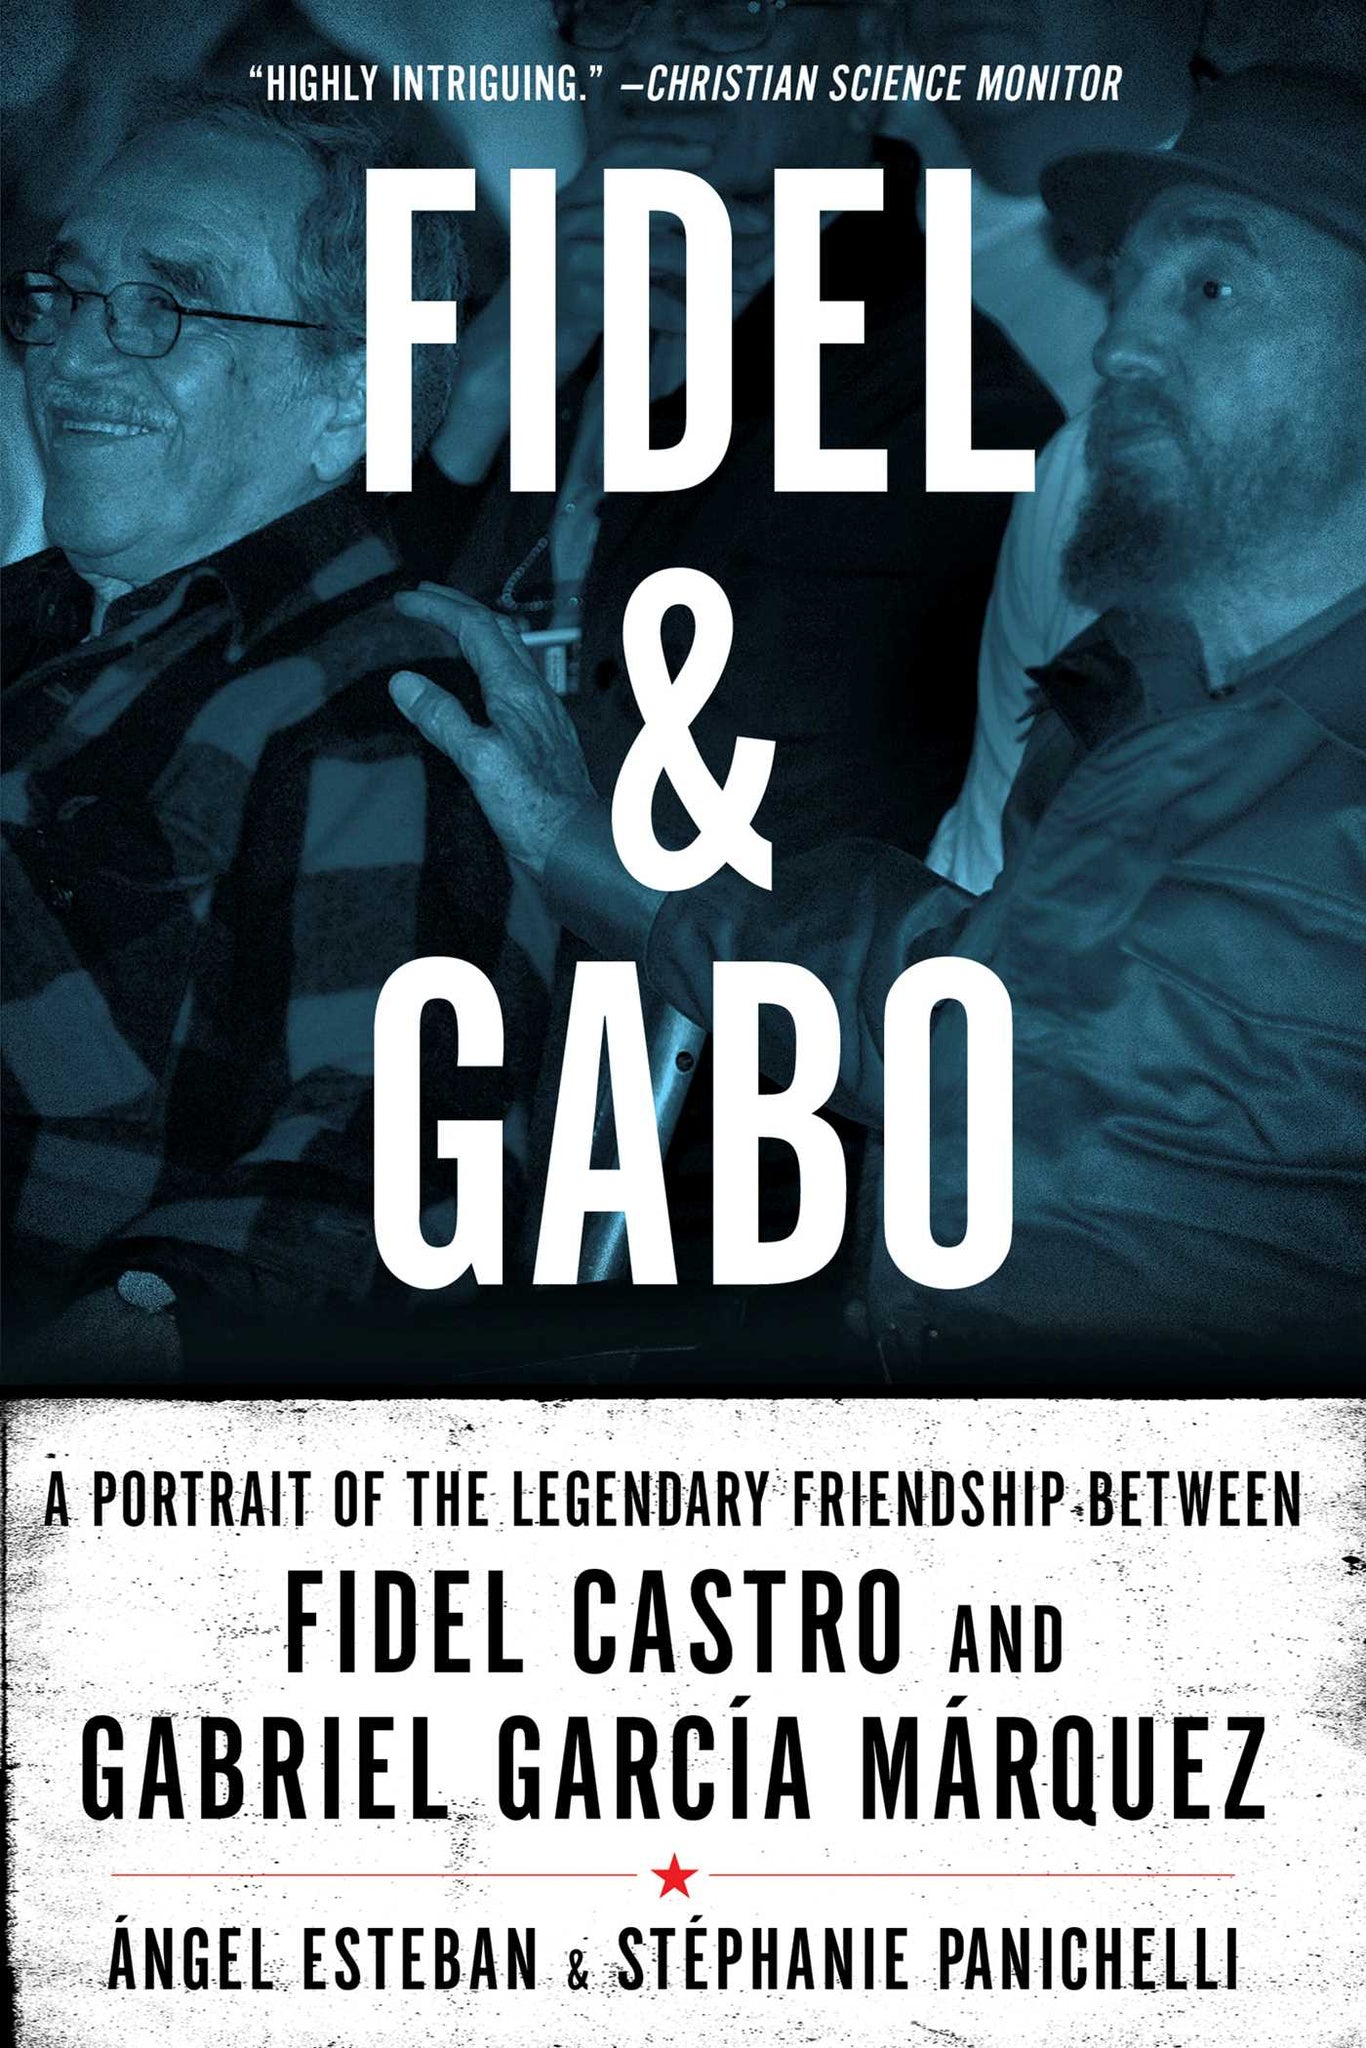 Fidel & Gabo